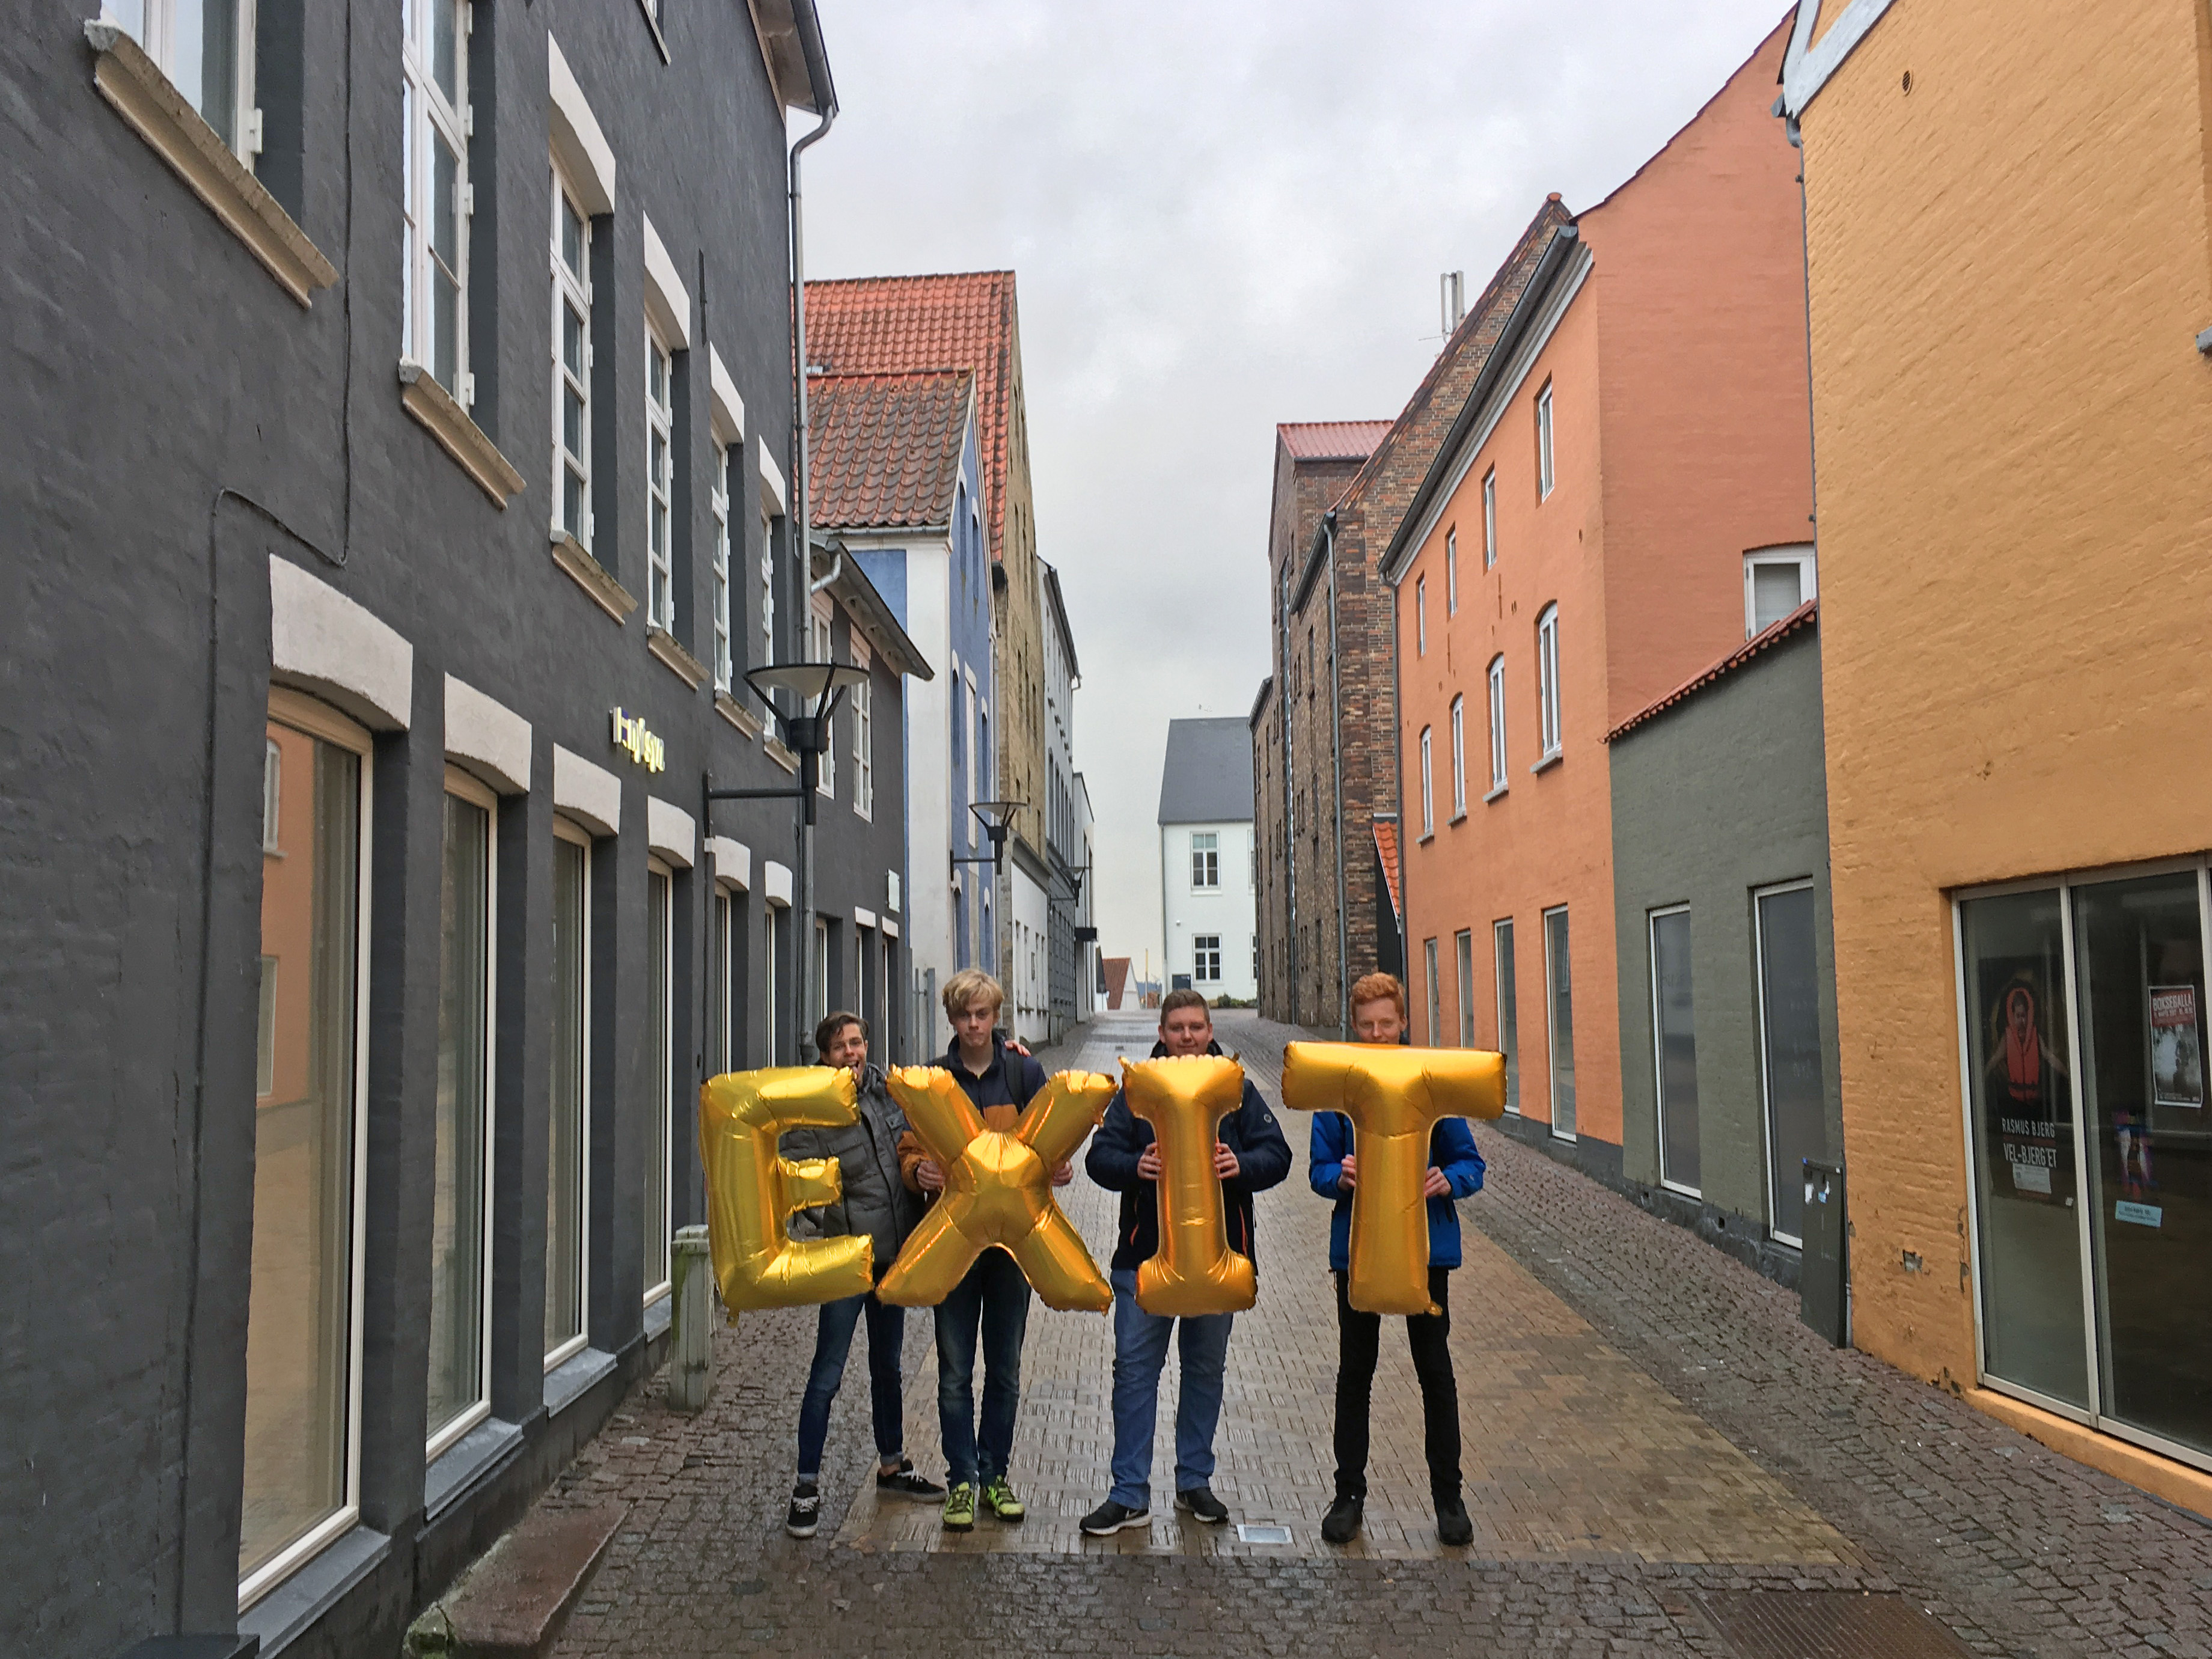 Denmark, Aabenraa - Exit, Silence Was Golden, gold balloons